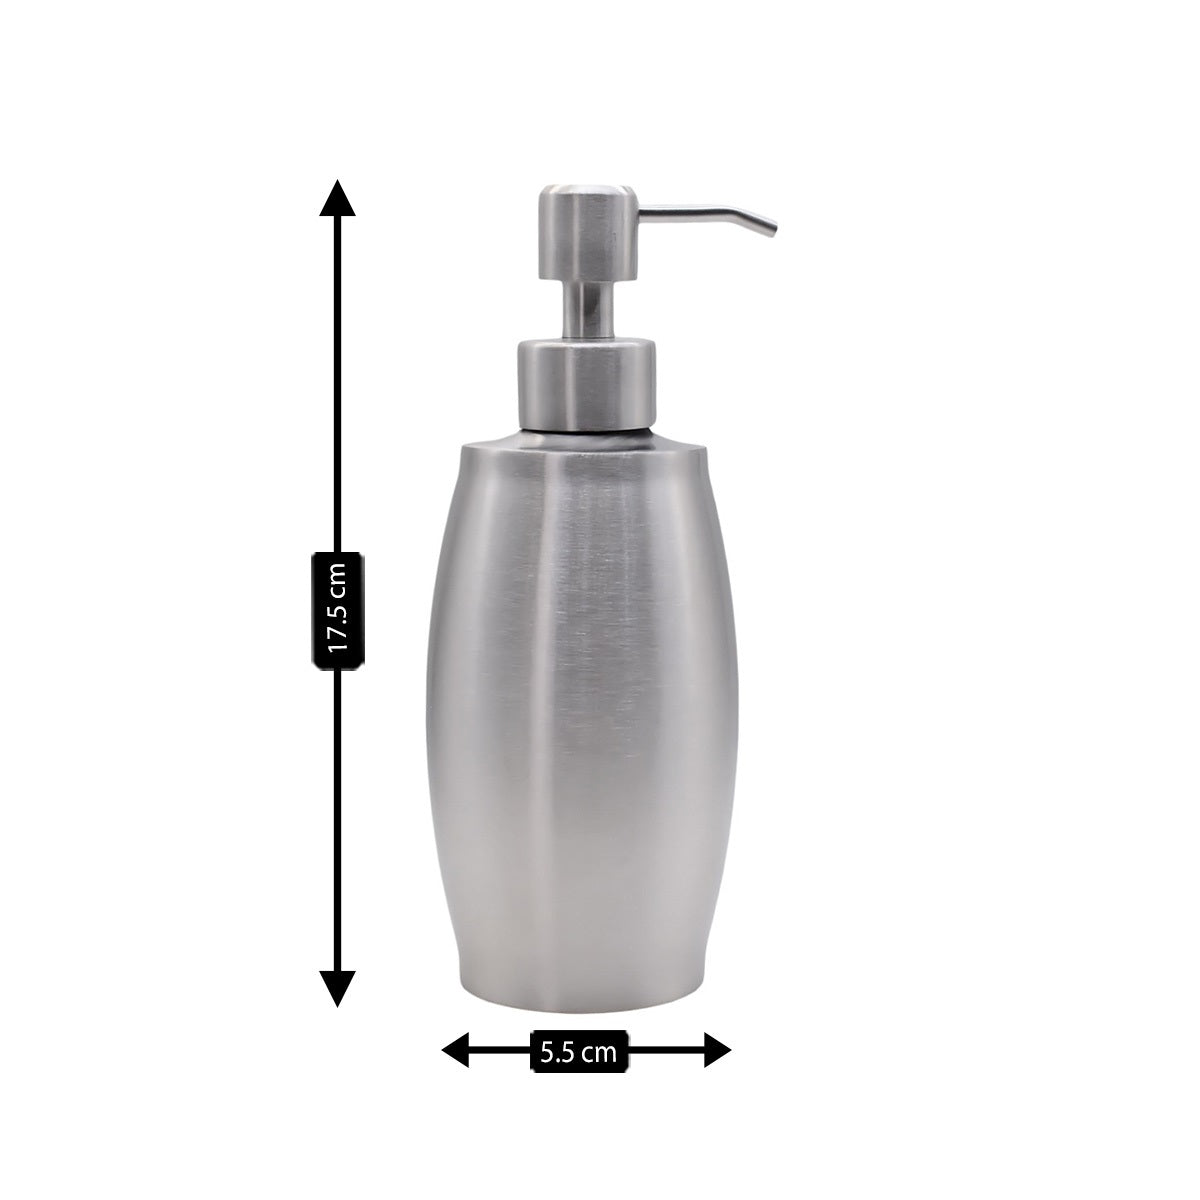 Stainless Steel Soap Dispenser Pump (8788)